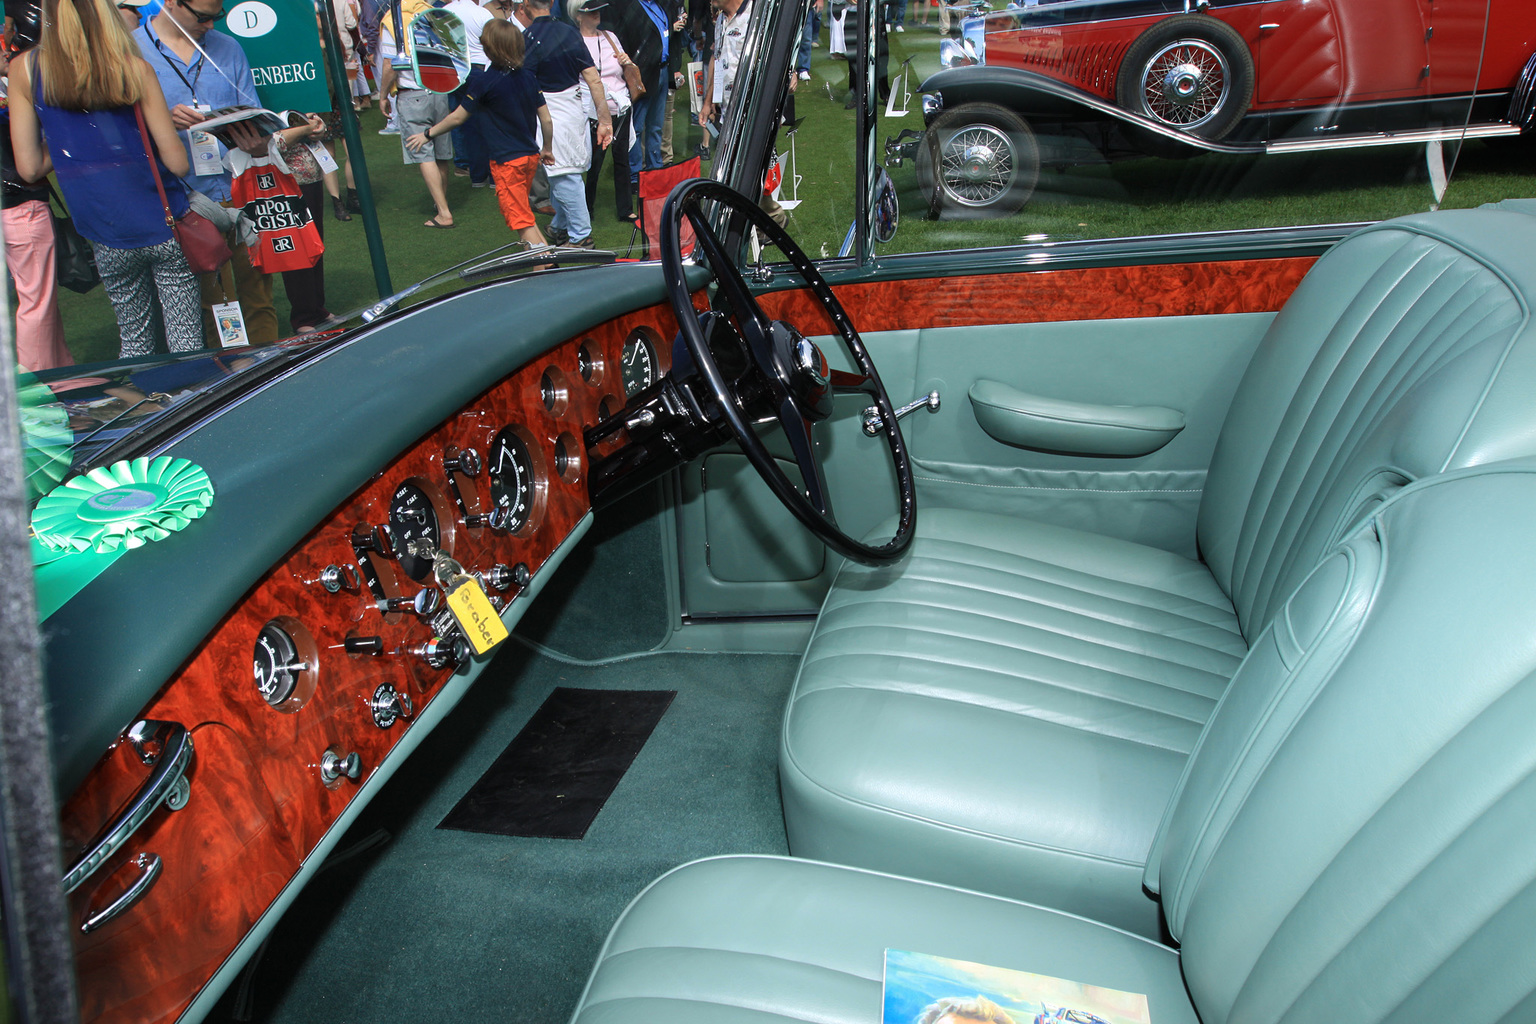 1955 Bentley S1 Continental Gallery